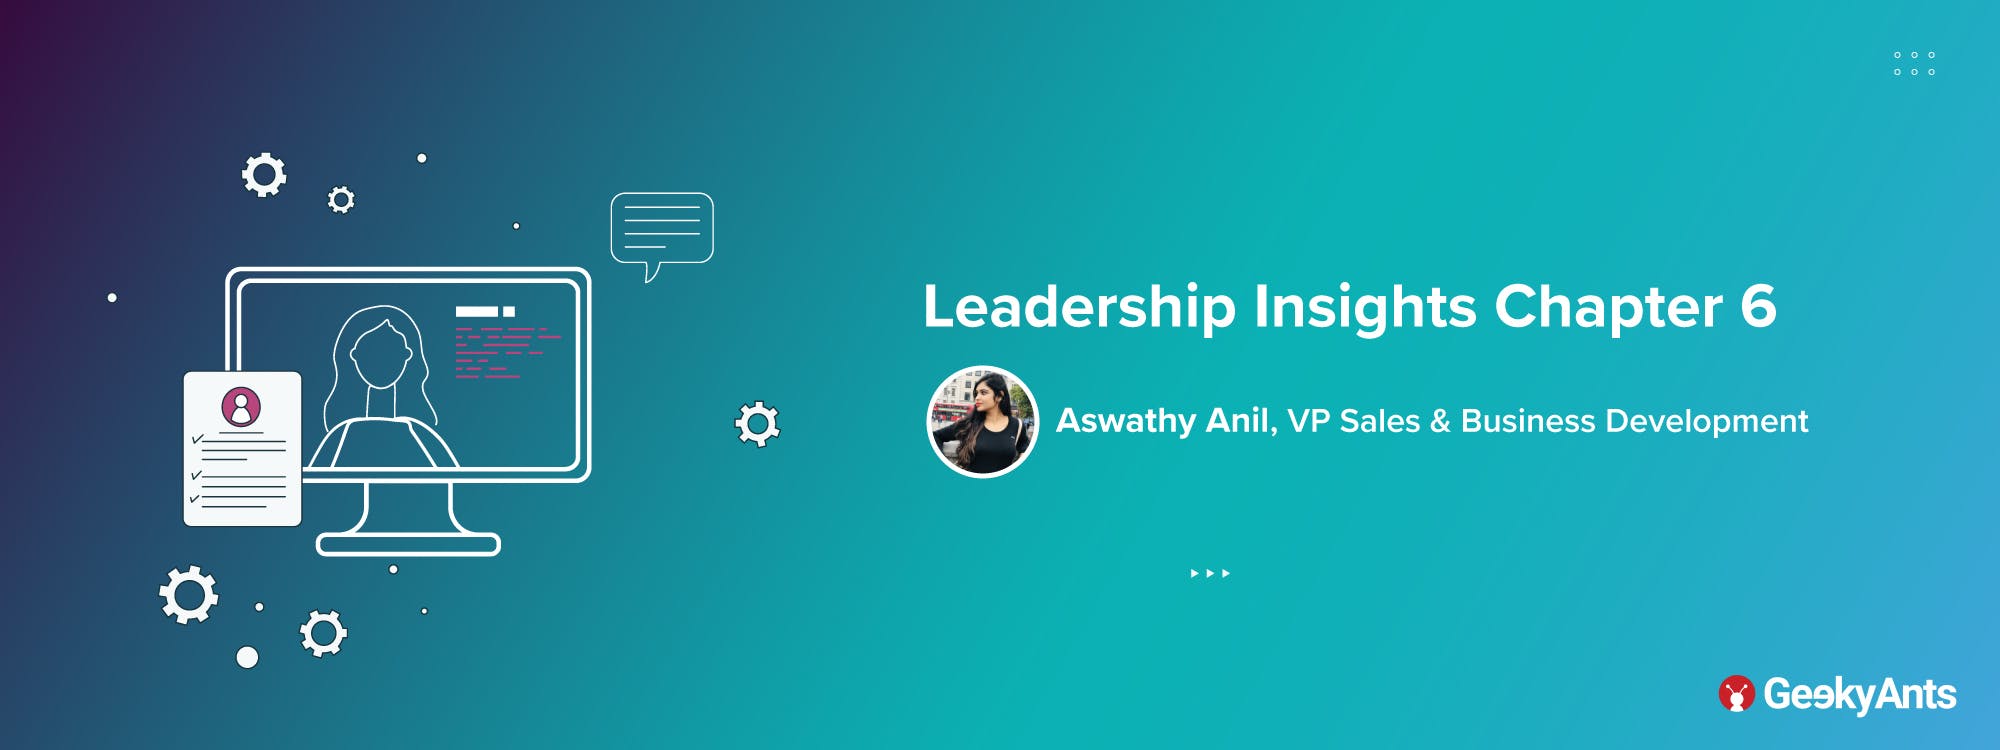 Leadership Insights Chapter 6: Aswathy Anil, VP Sales & Business Development